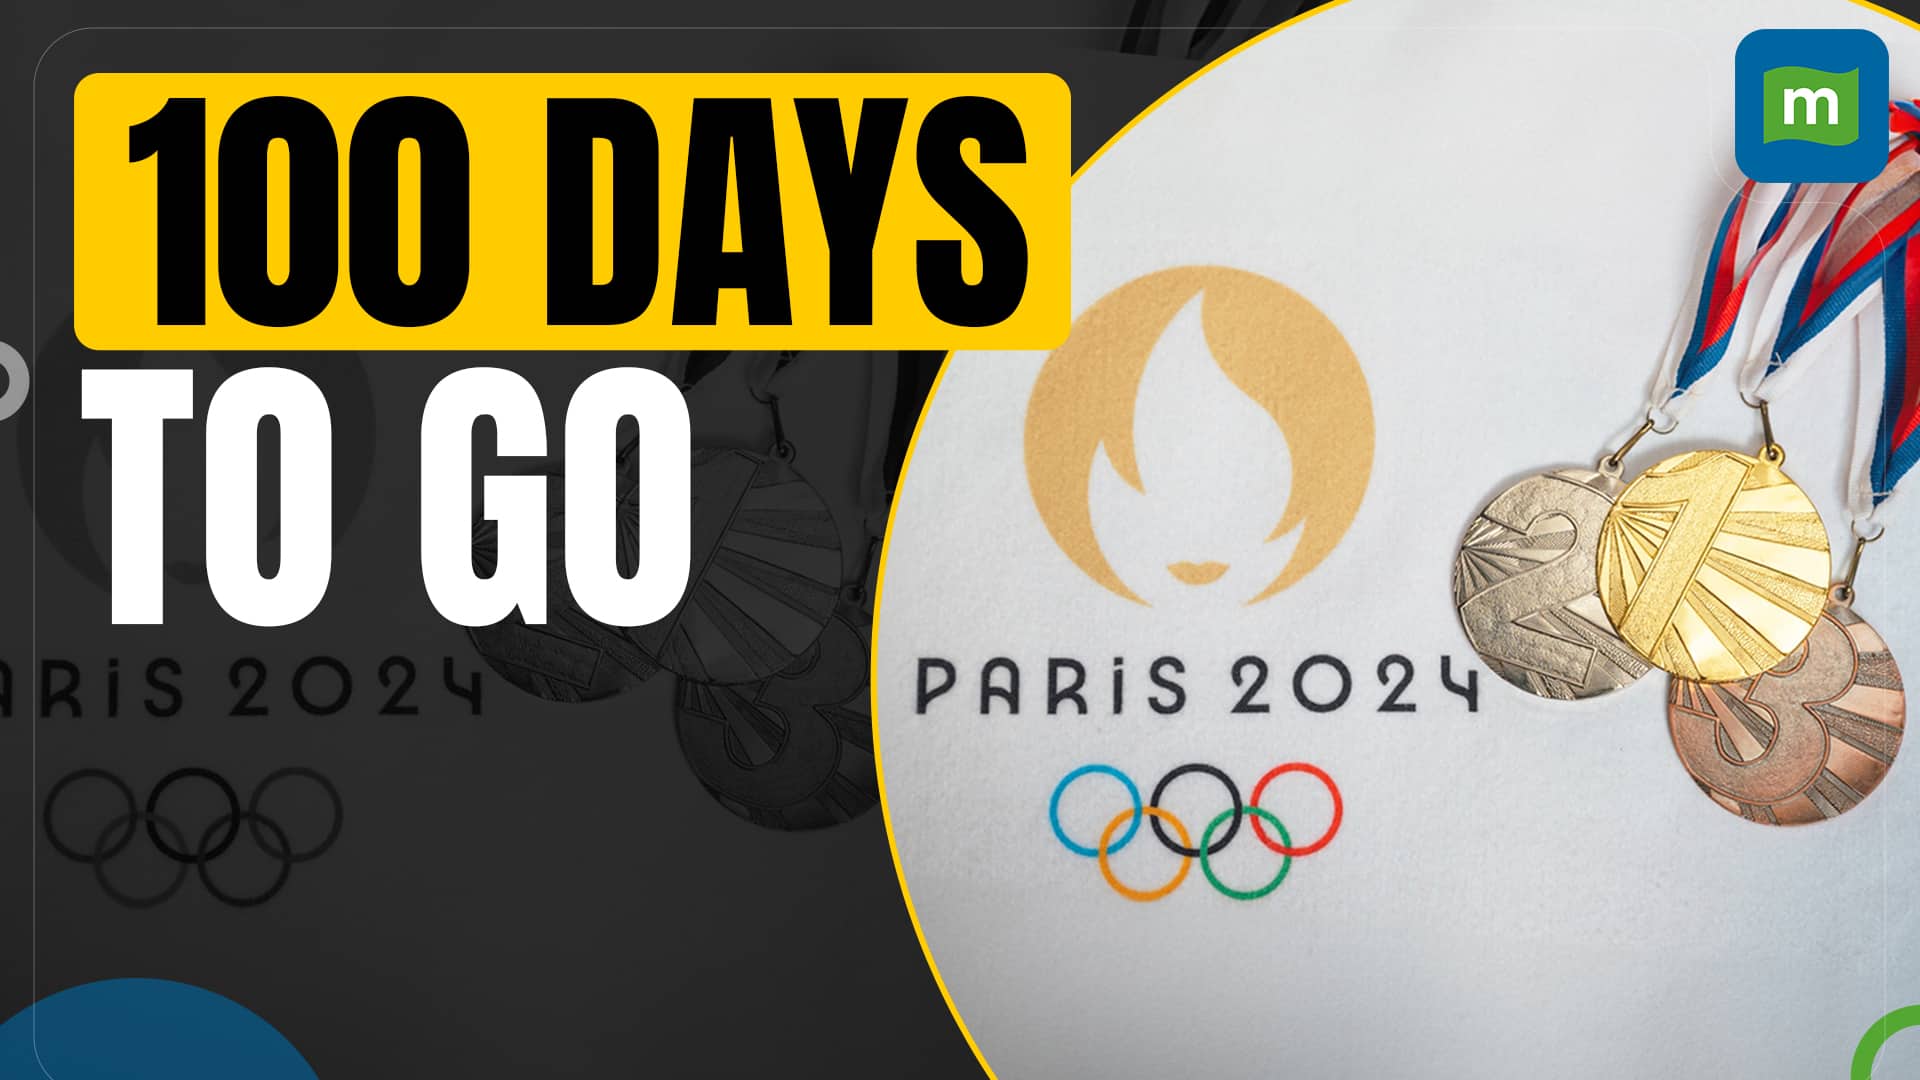 Paris 2024 Olympics: Eiffel Tower countdown turns to 100 days